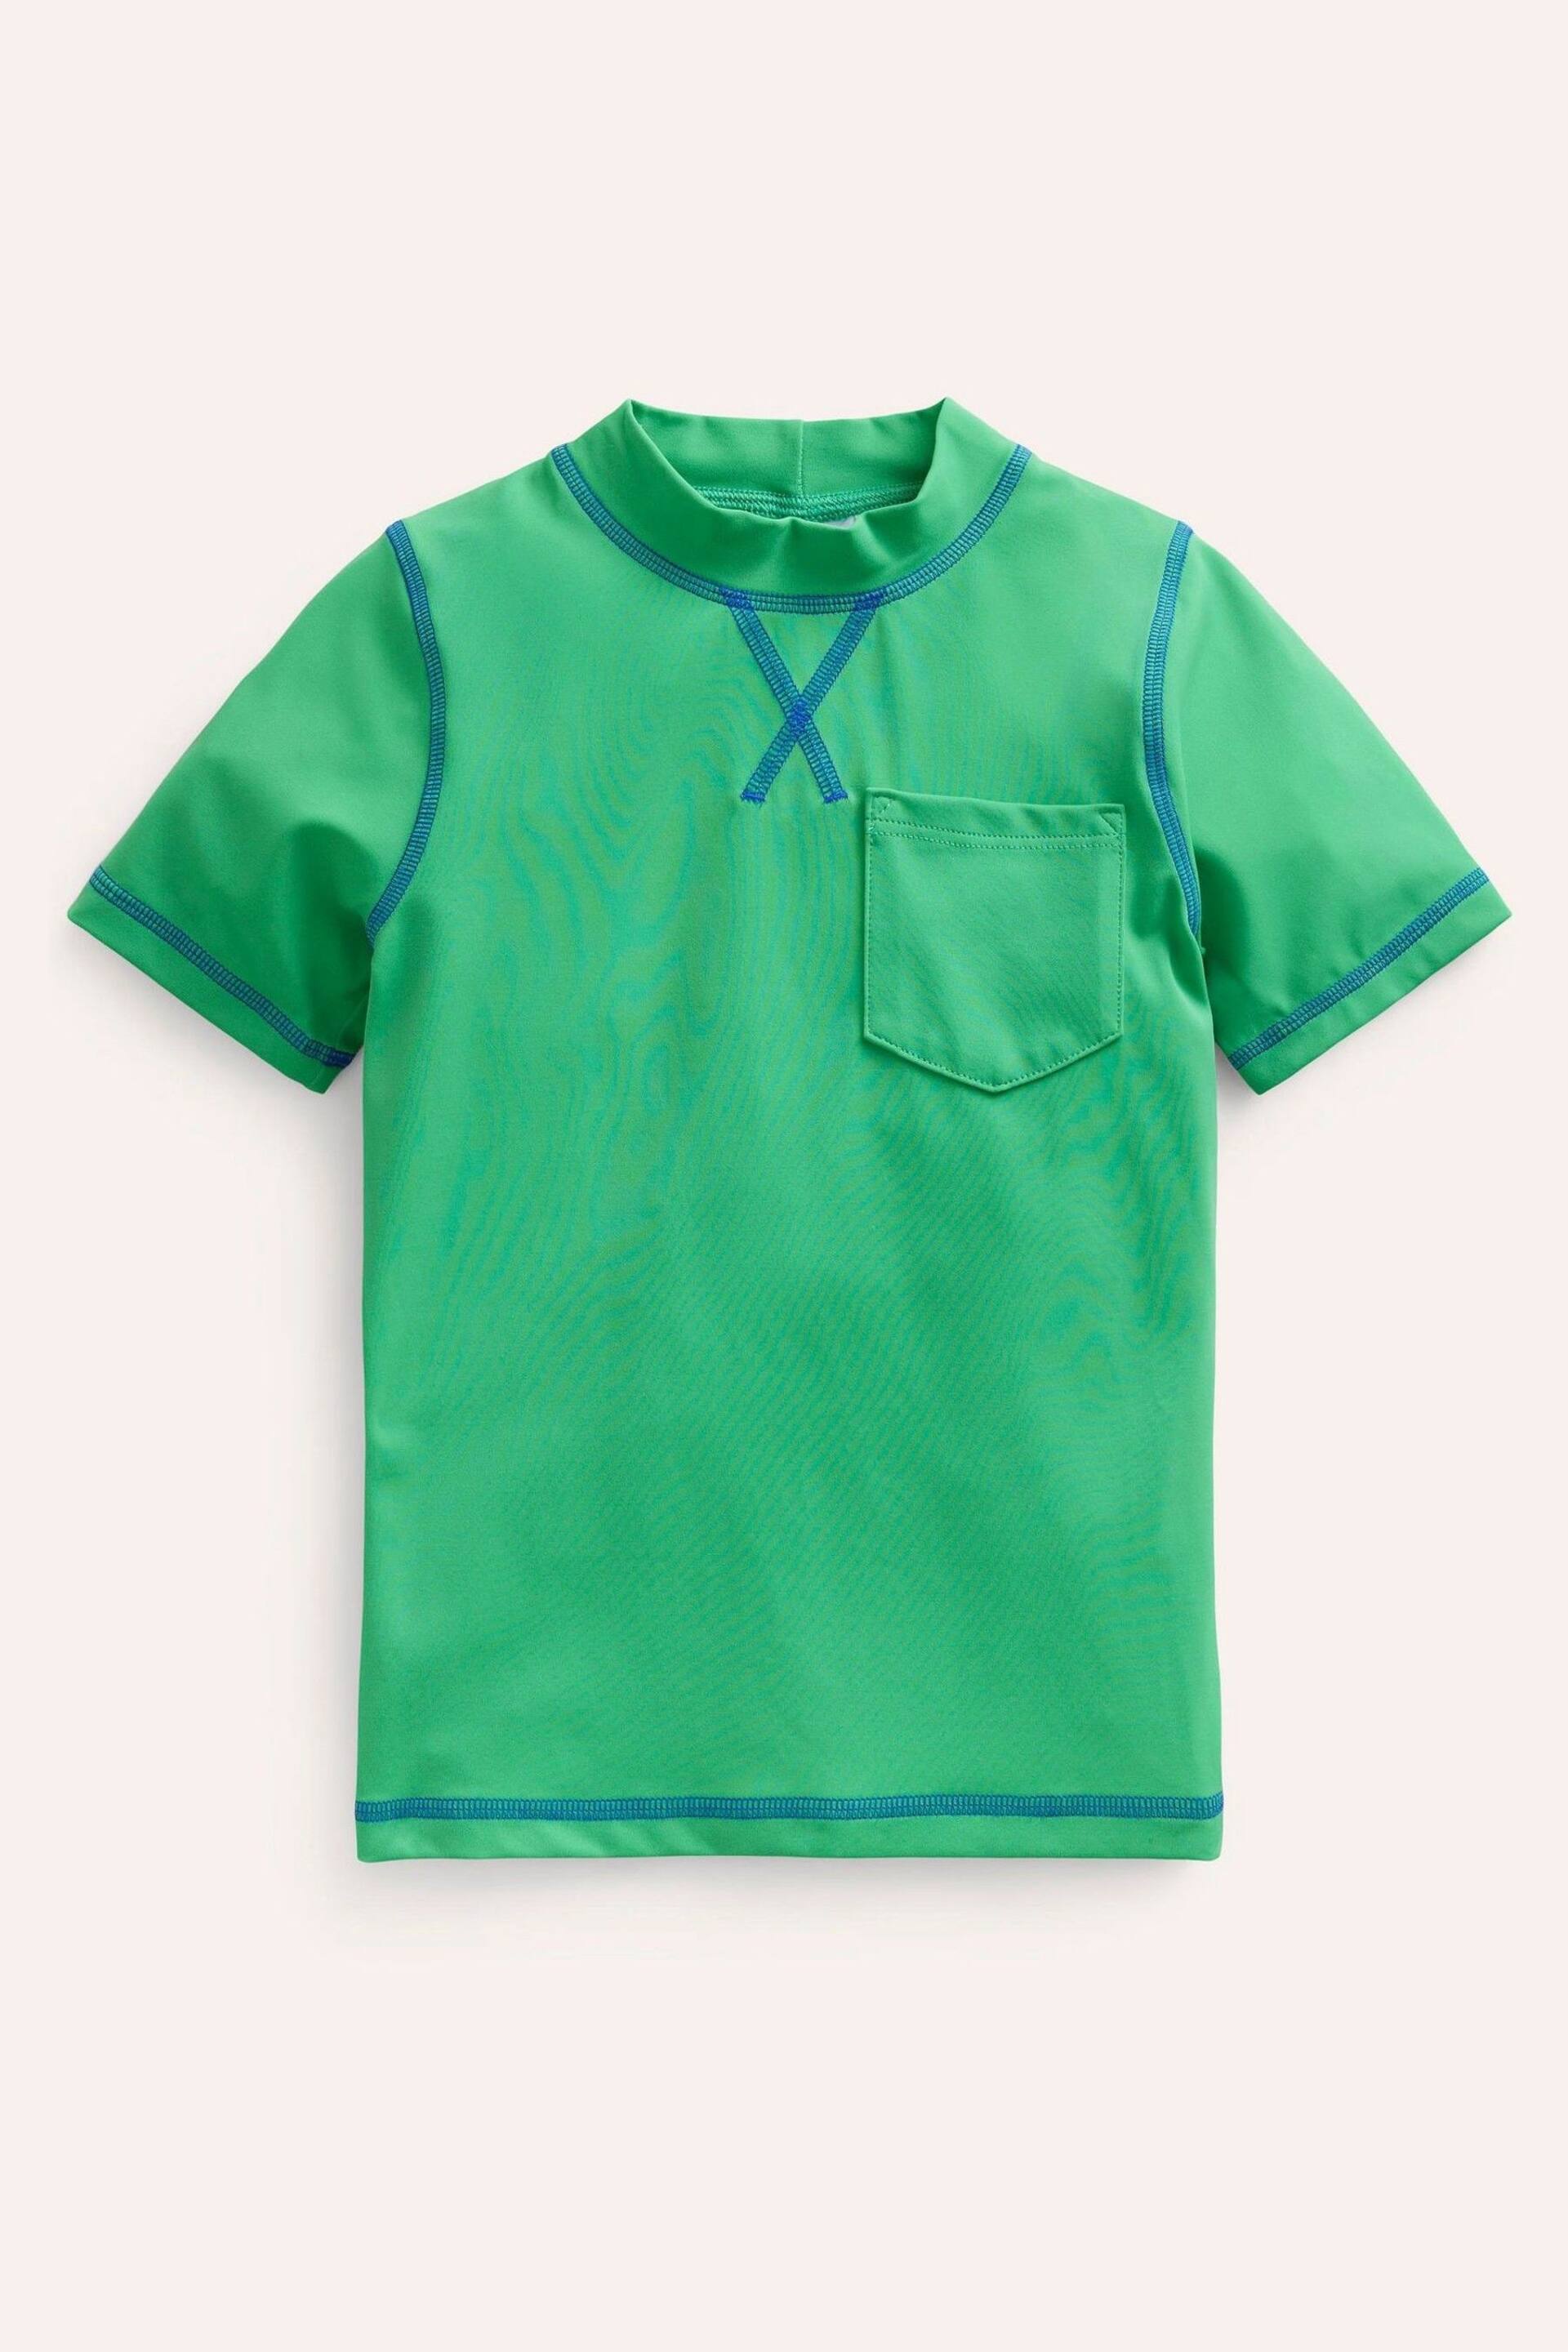 Boden Green Short Sleeve Rash Vest - Image 1 of 3